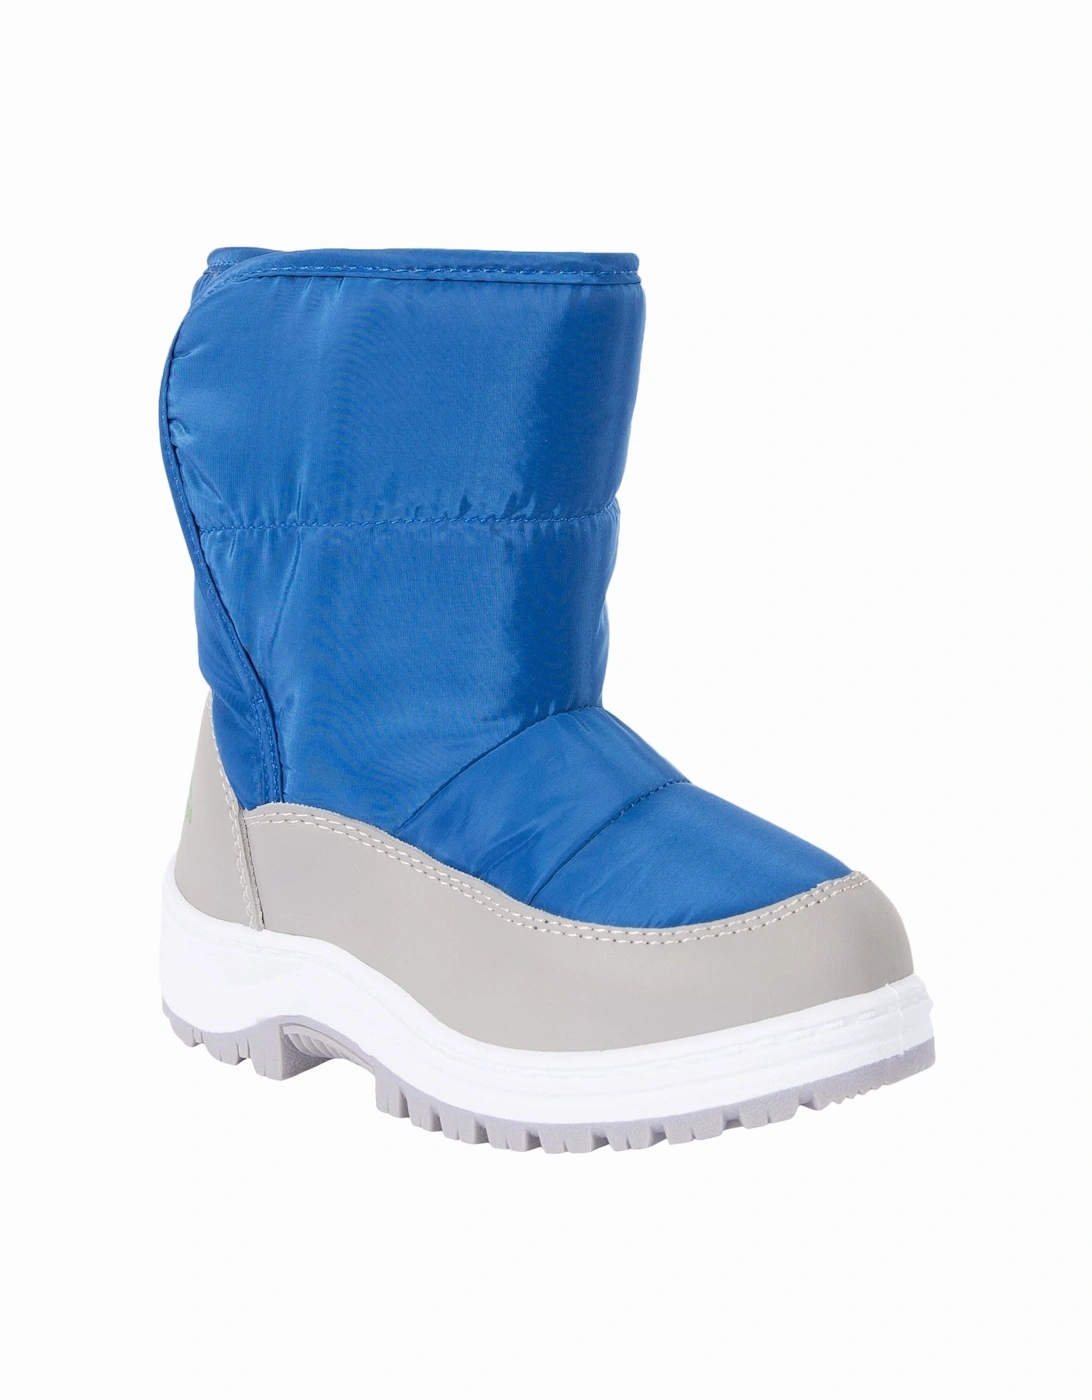 Kids Hayden Insulated Fleece Lined Snow Boots - Blue, 7 of 6